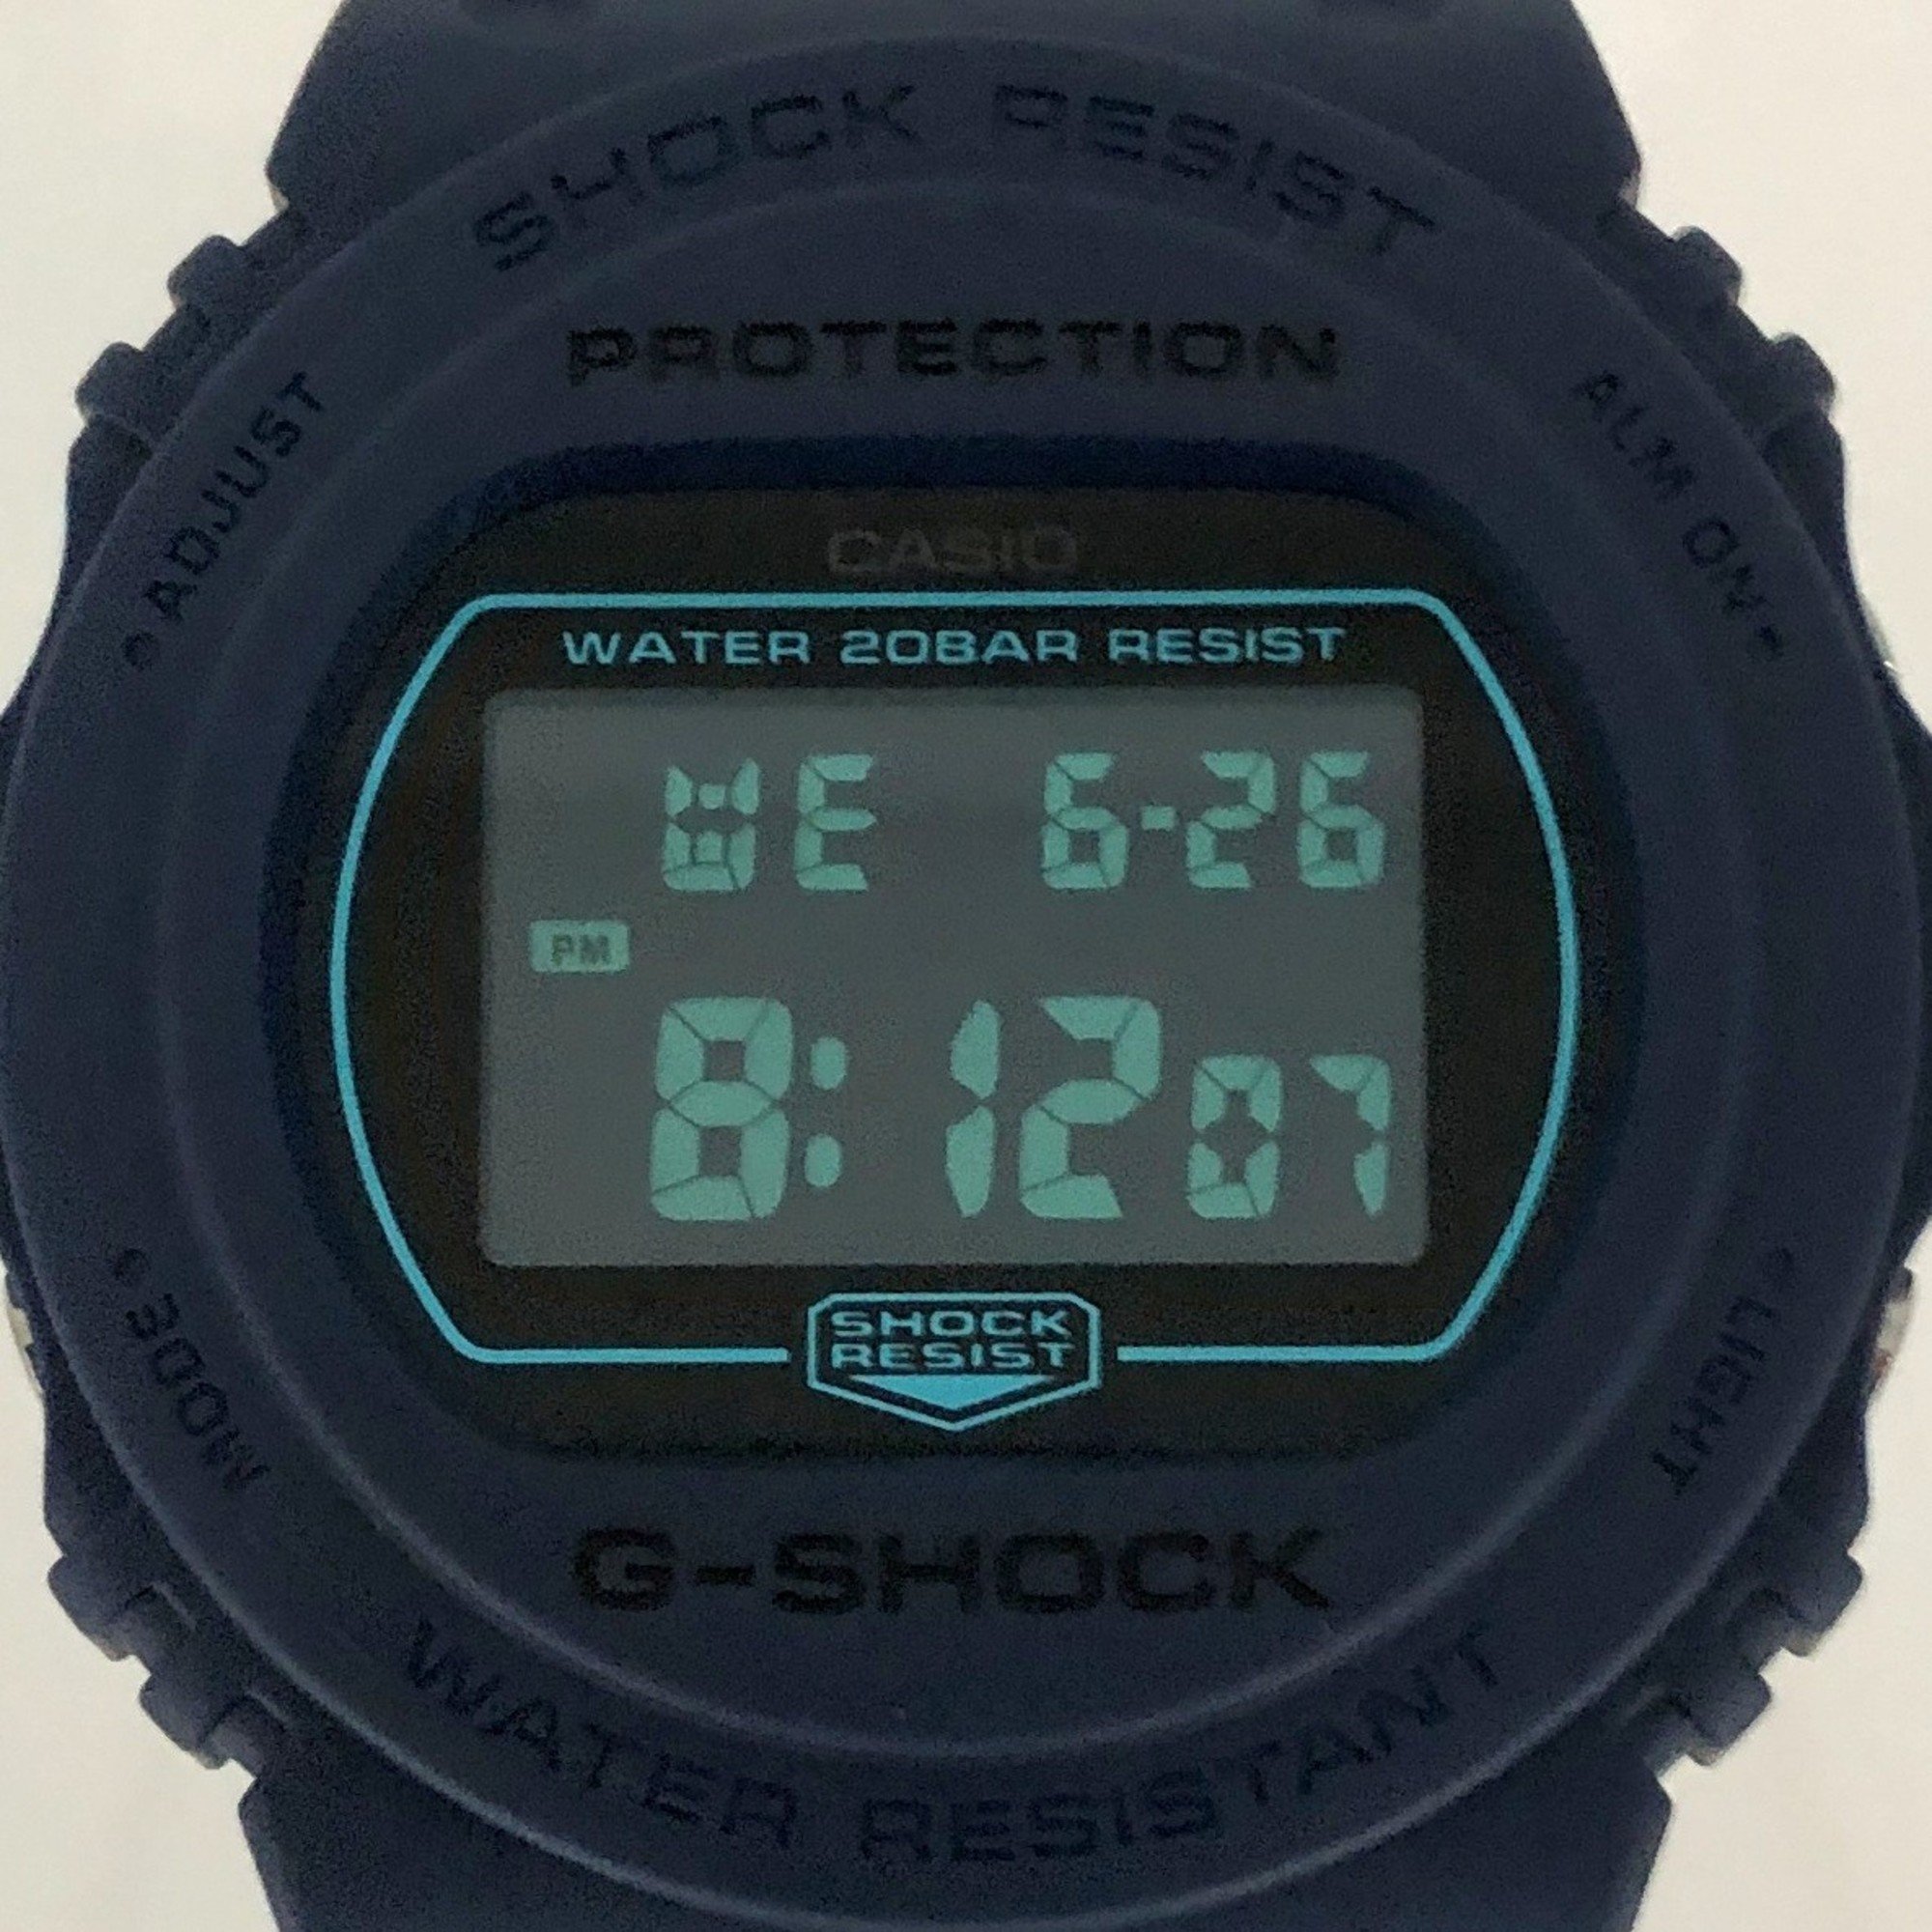 G-SHOCK CASIO Watch DW-5700BBM-2 Sting Matte Blue One Tone Round Model Digital Mikunigaoka Store